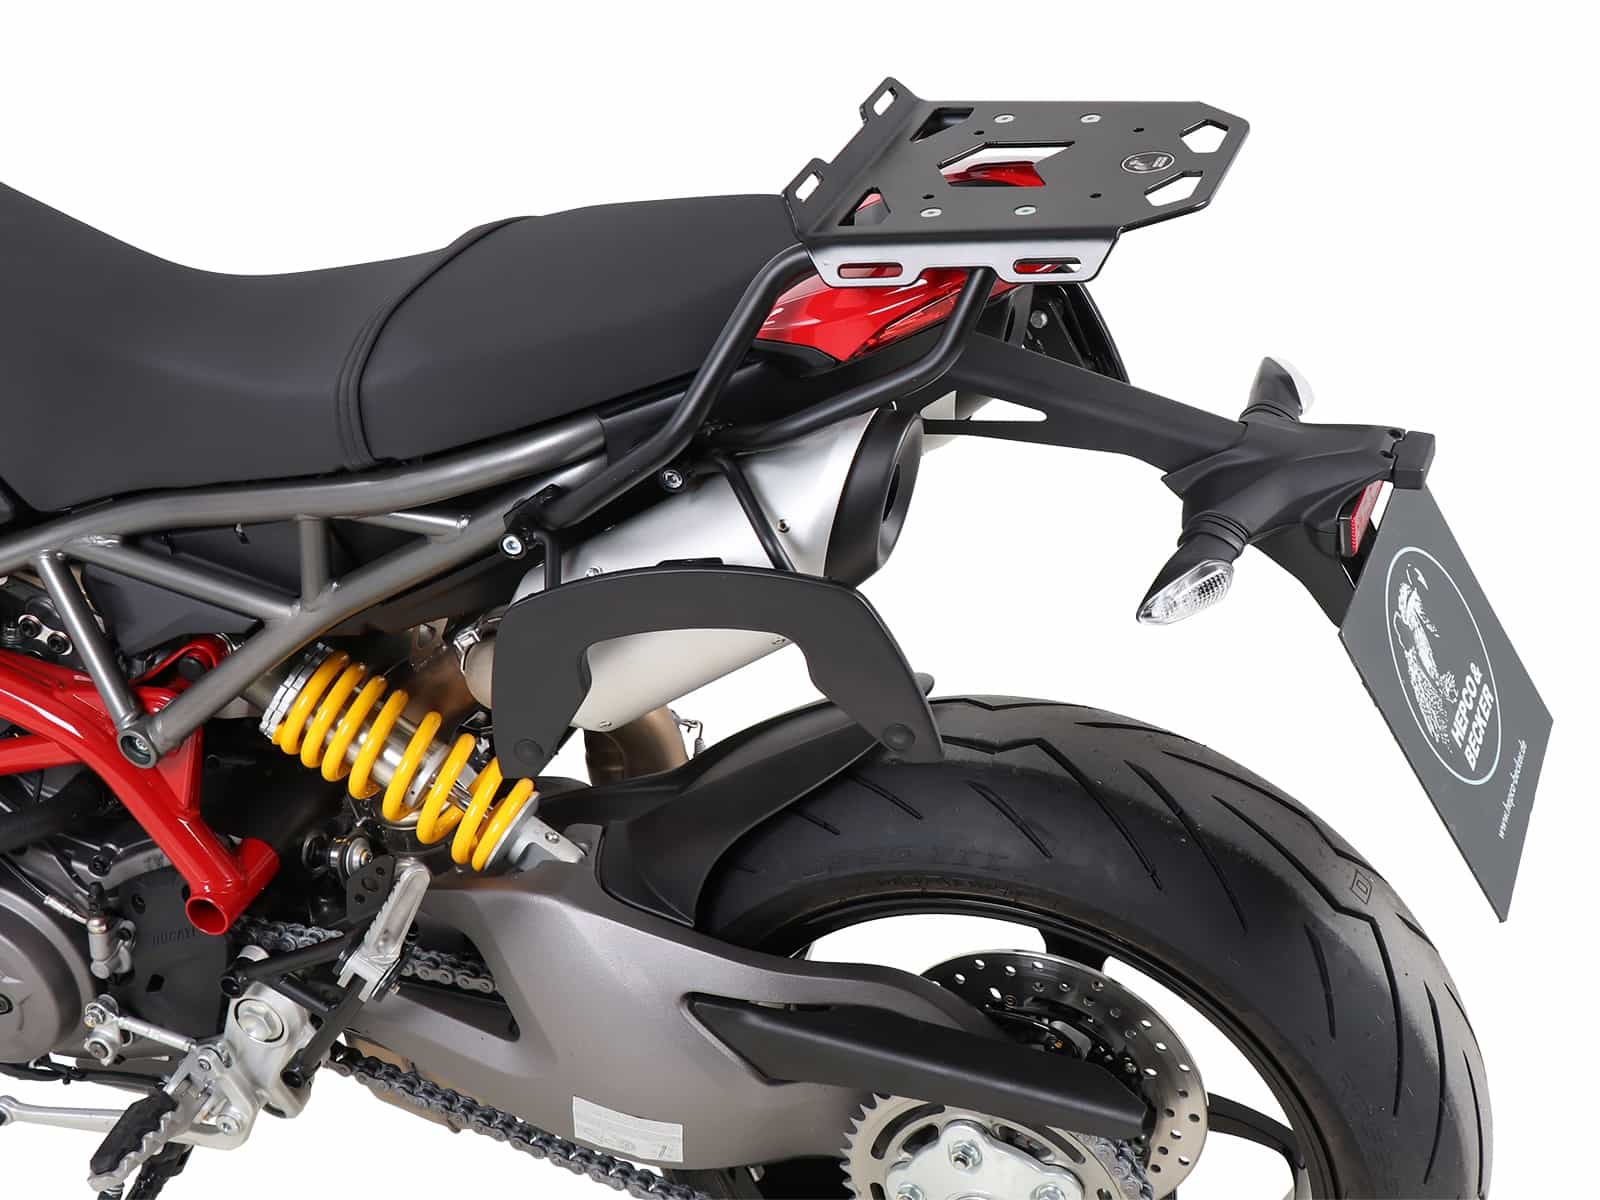 Minirack soft luggage rear rack for Ducati Hypermotard 950/SP (2019-)